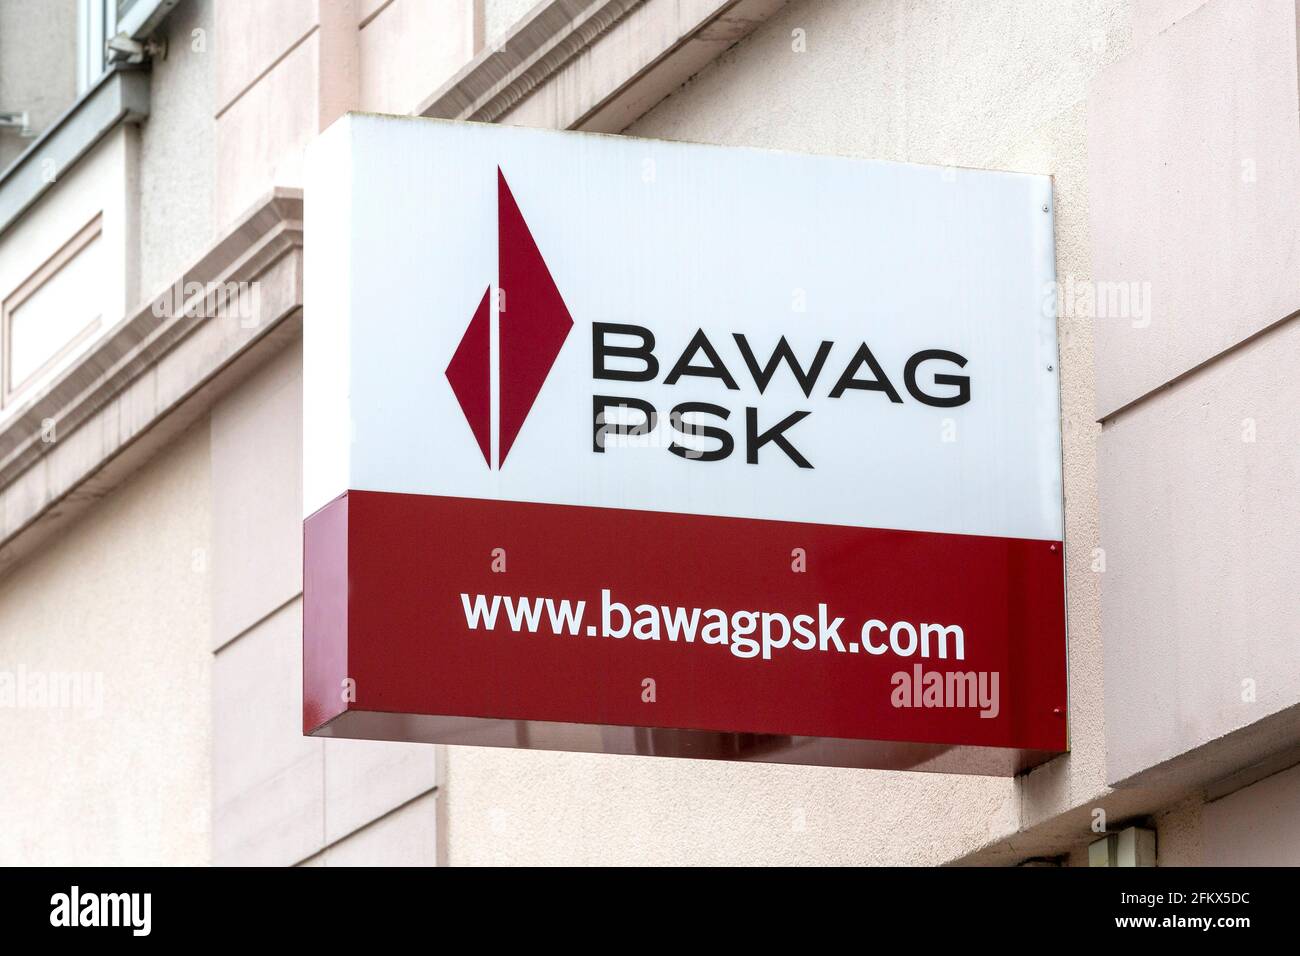 BAWAGPSK, Bank Stock Photo